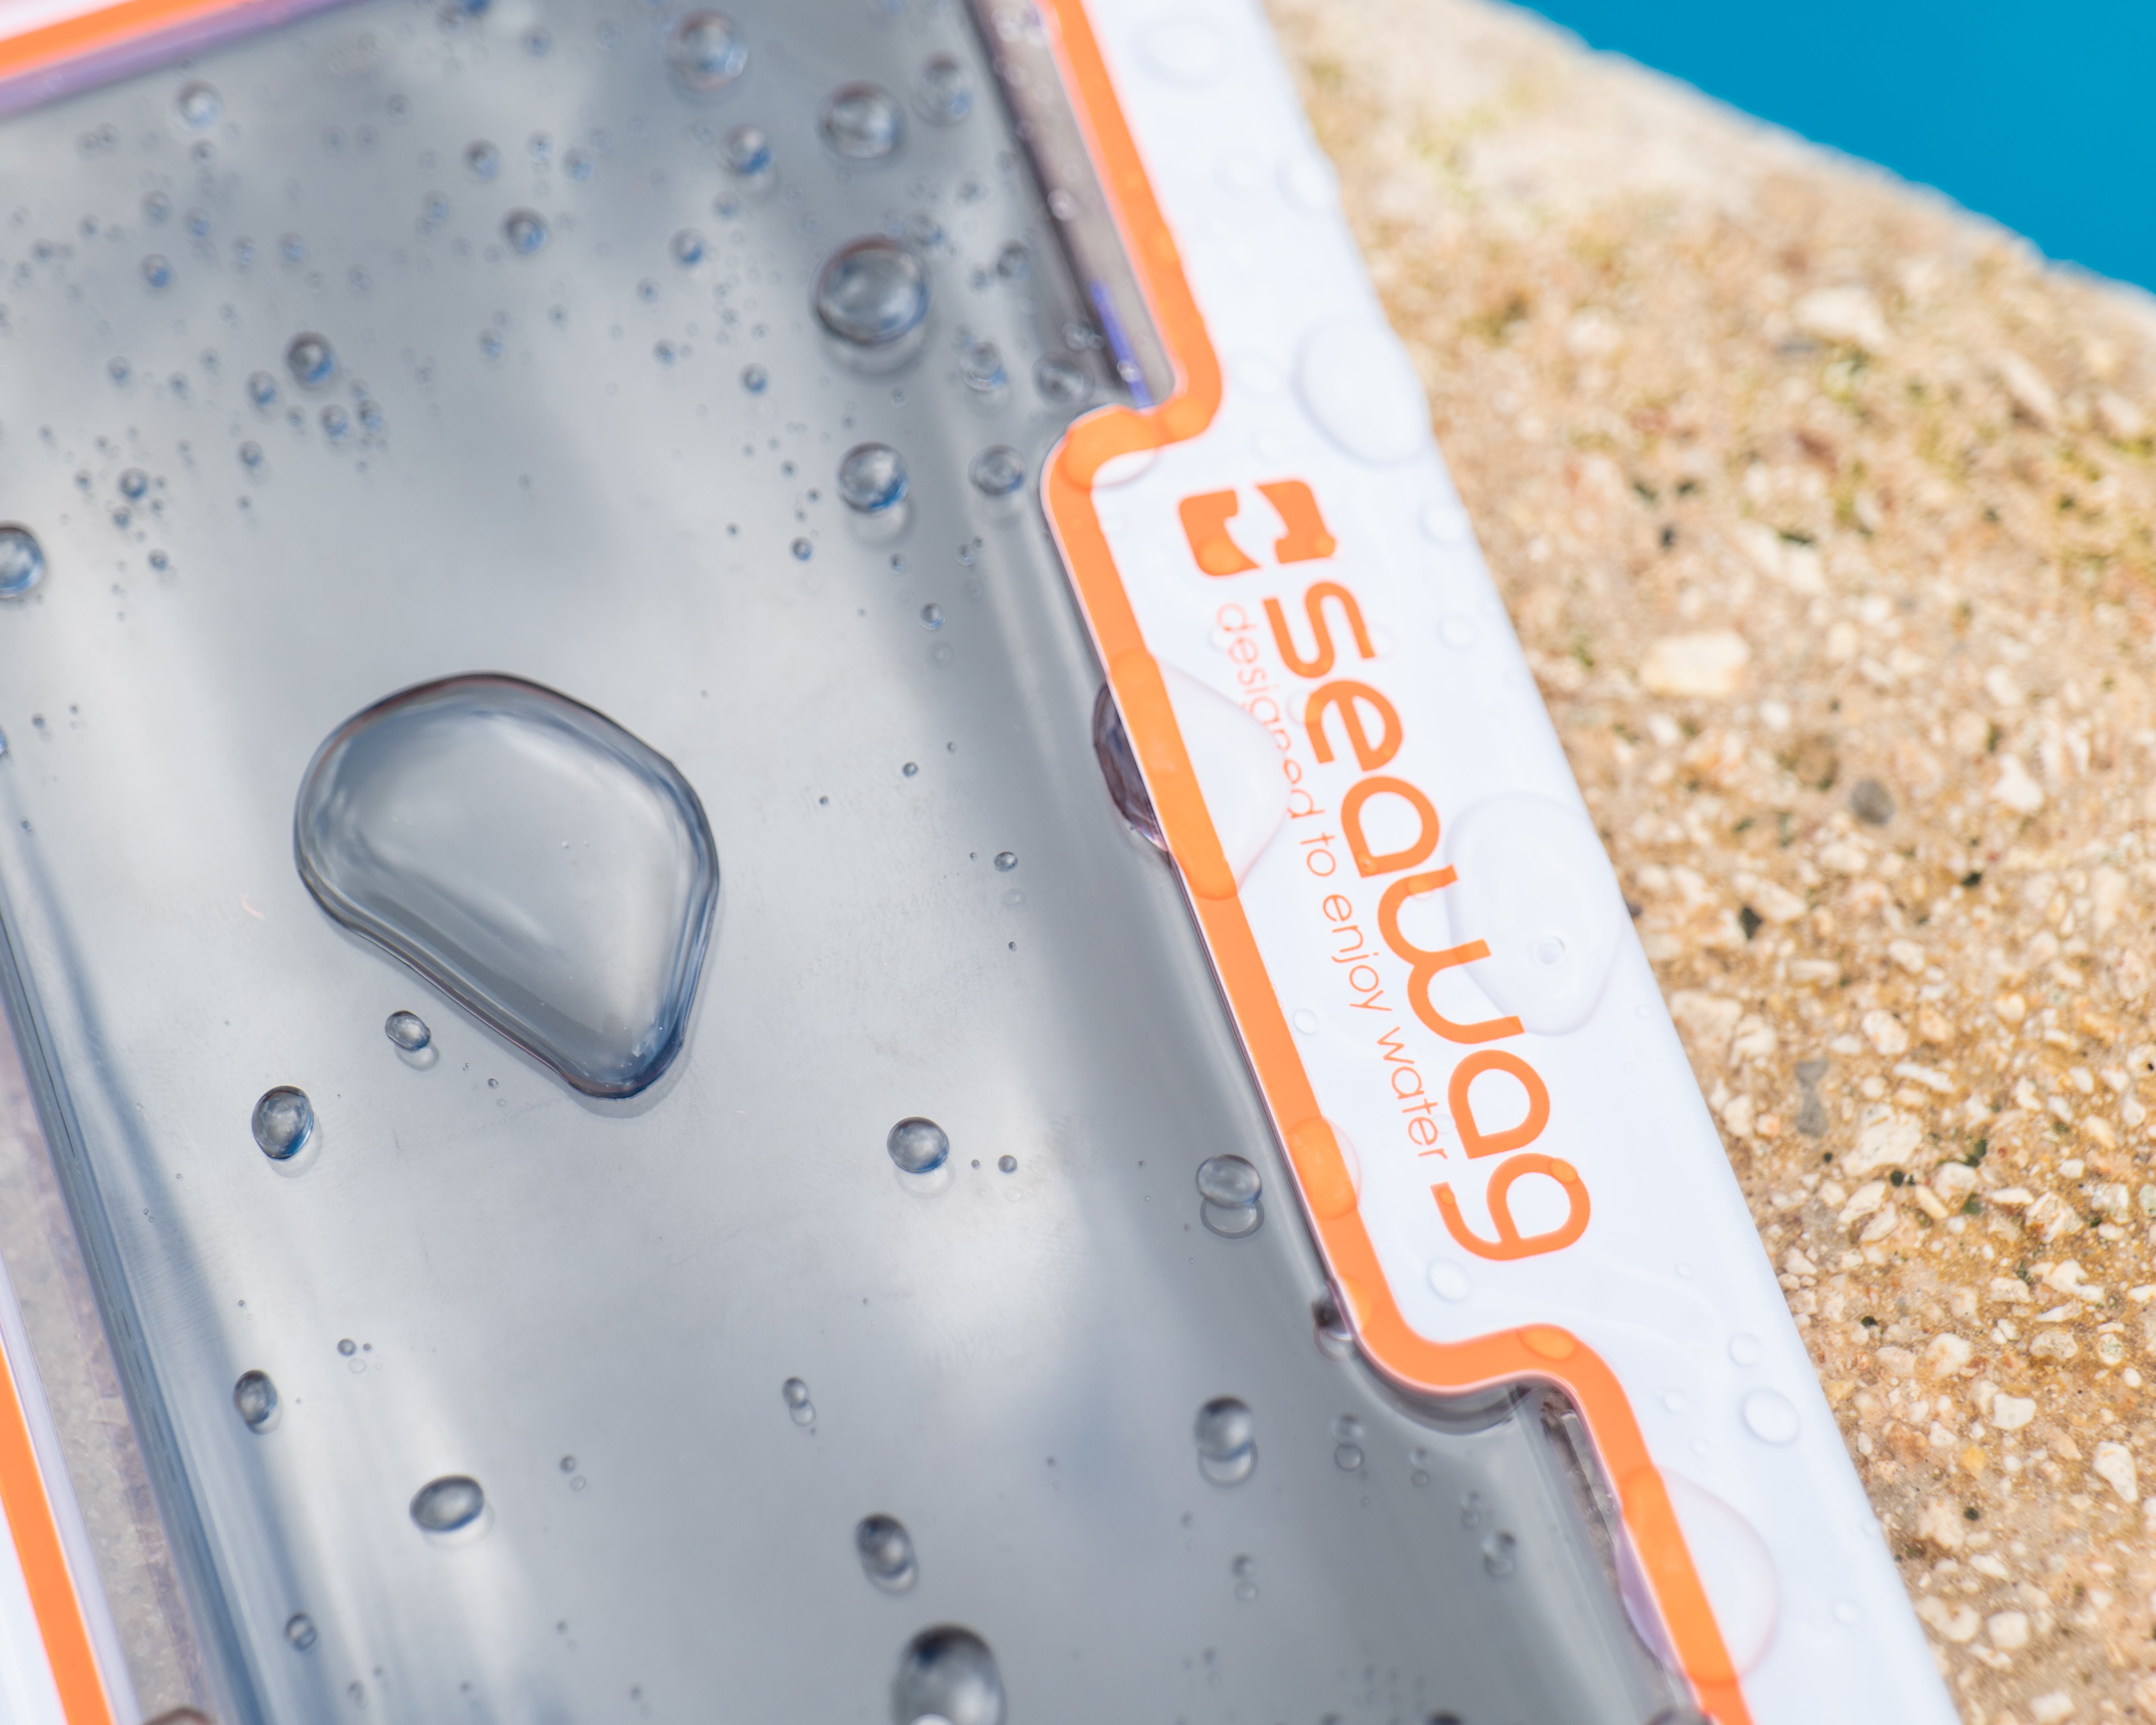 Universal Waterproof Case For Smartphone - White/Orange